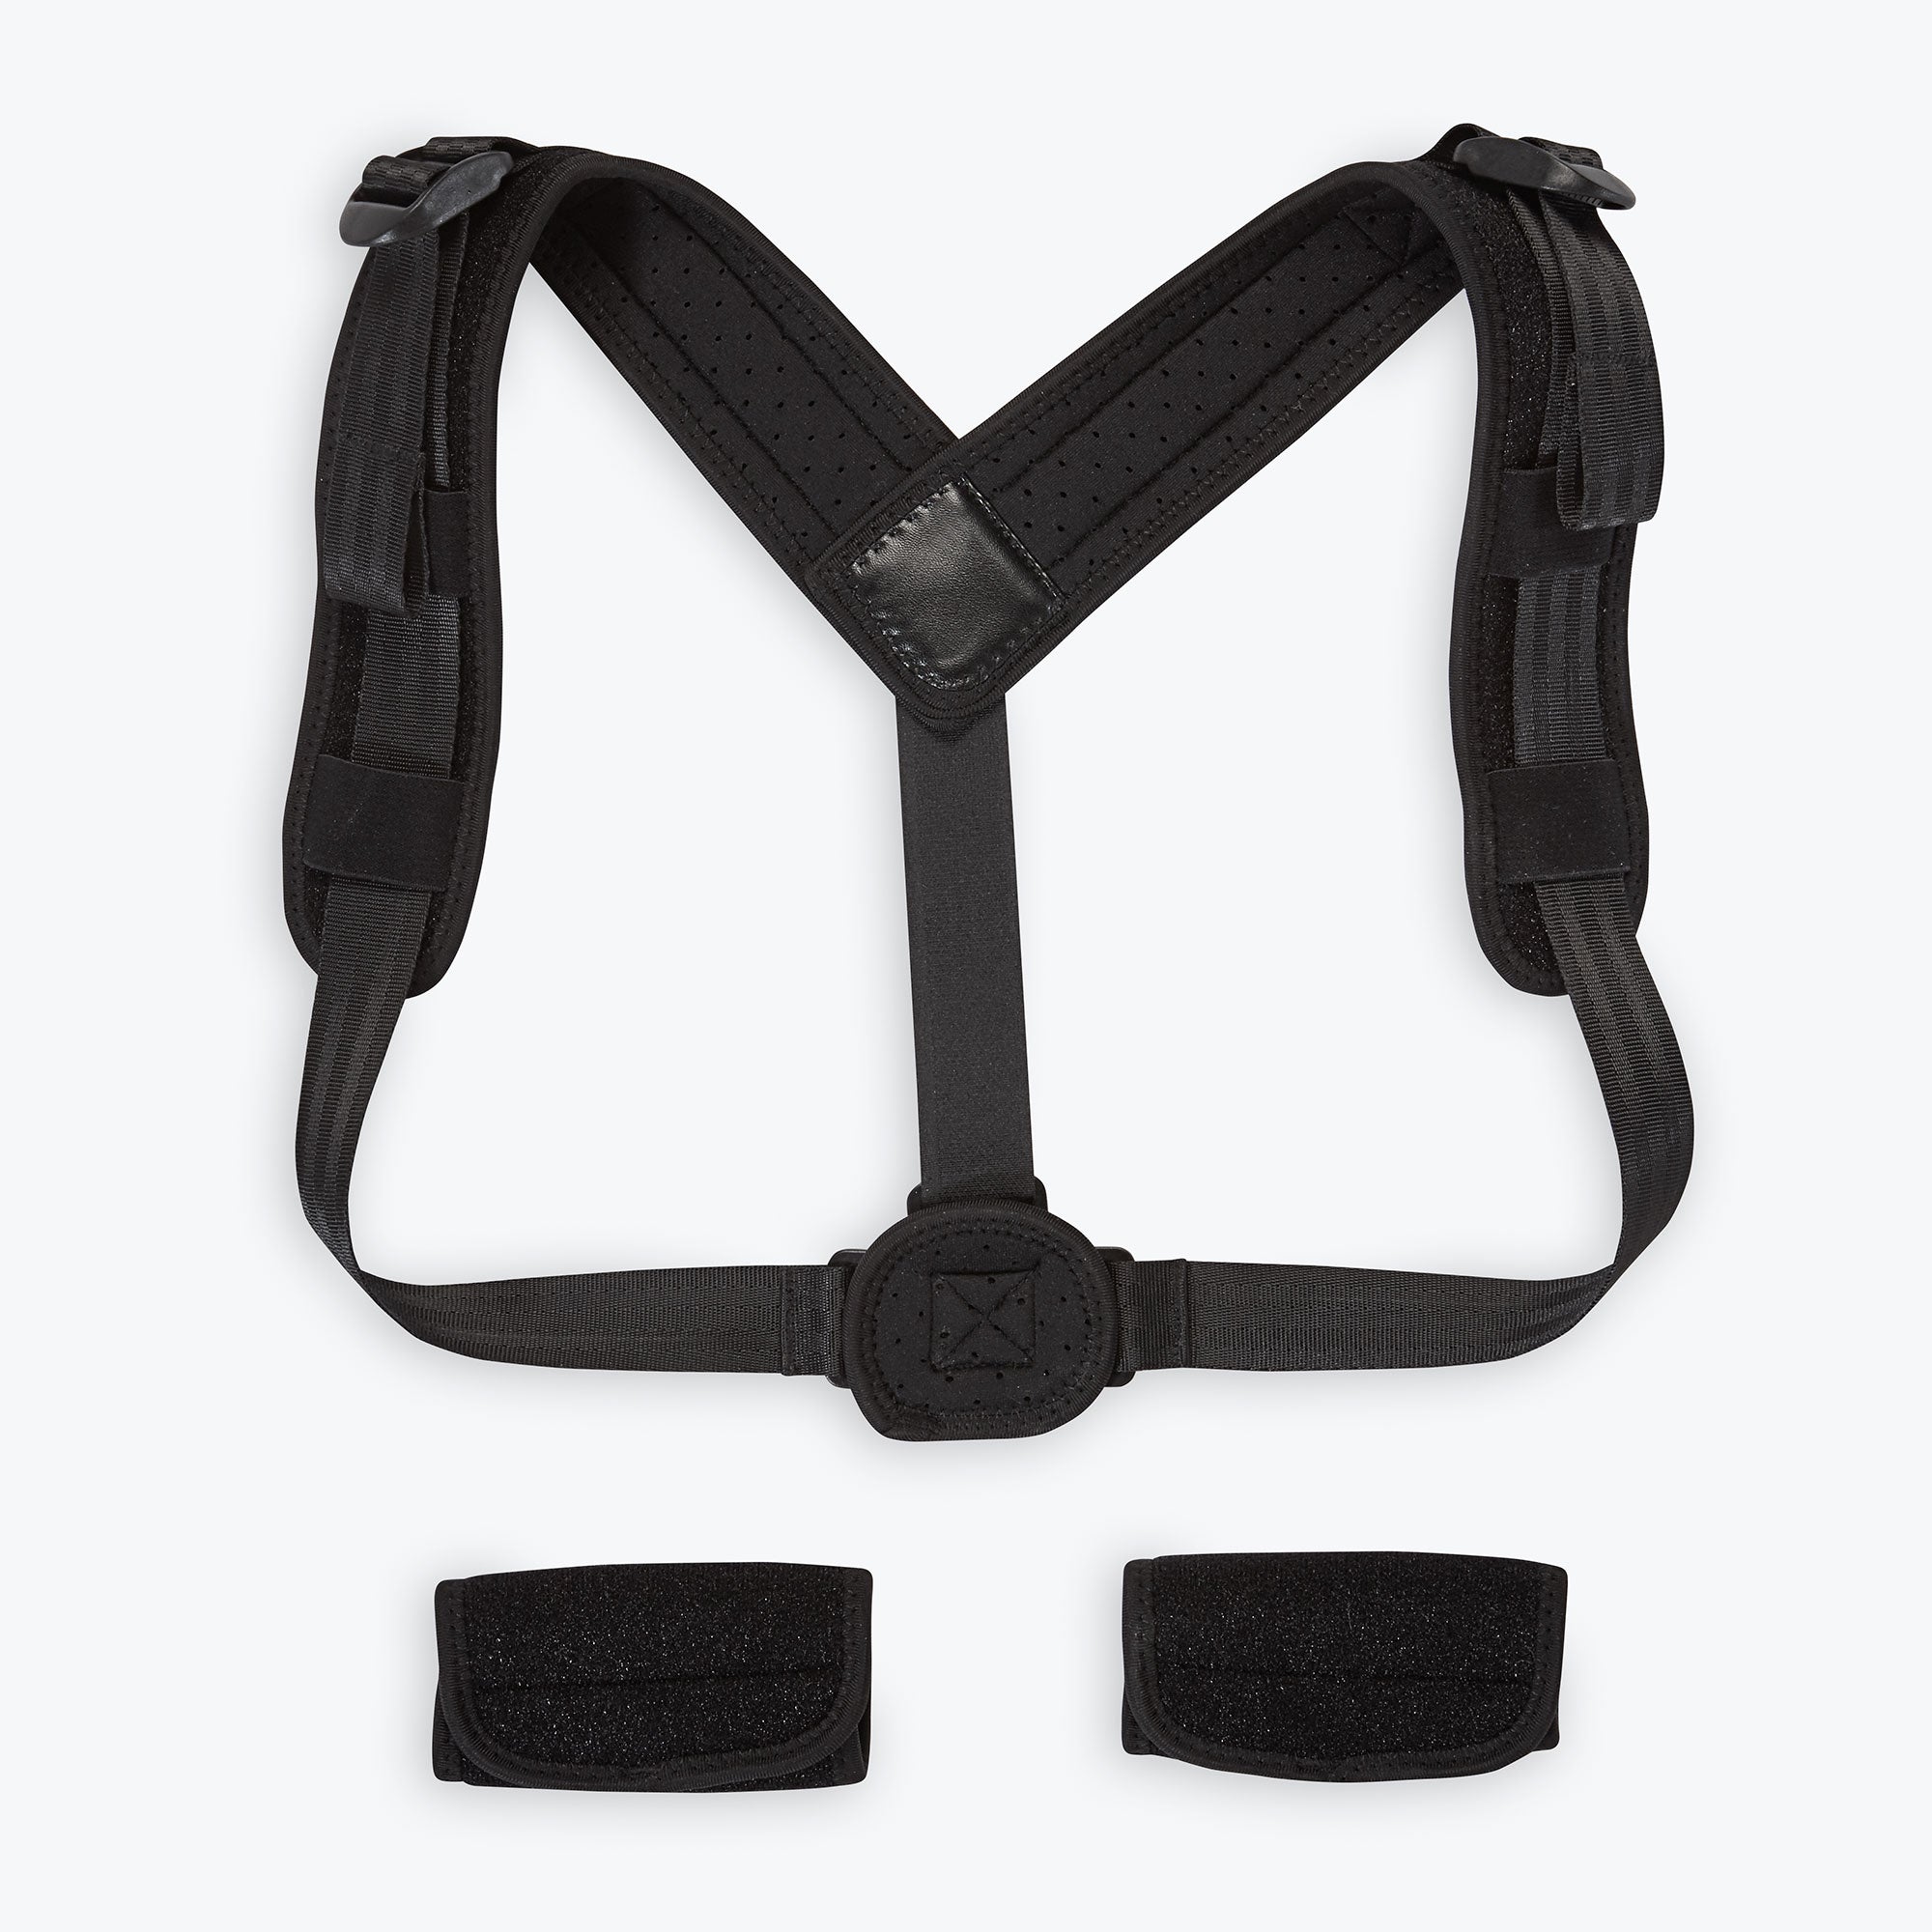 Gaiam Restore Posture Corrector for Women & Men - Back Straightener  Adjustable Straps Compact Brace Support for Clavicle, Neck, Shoulder,  Invisible